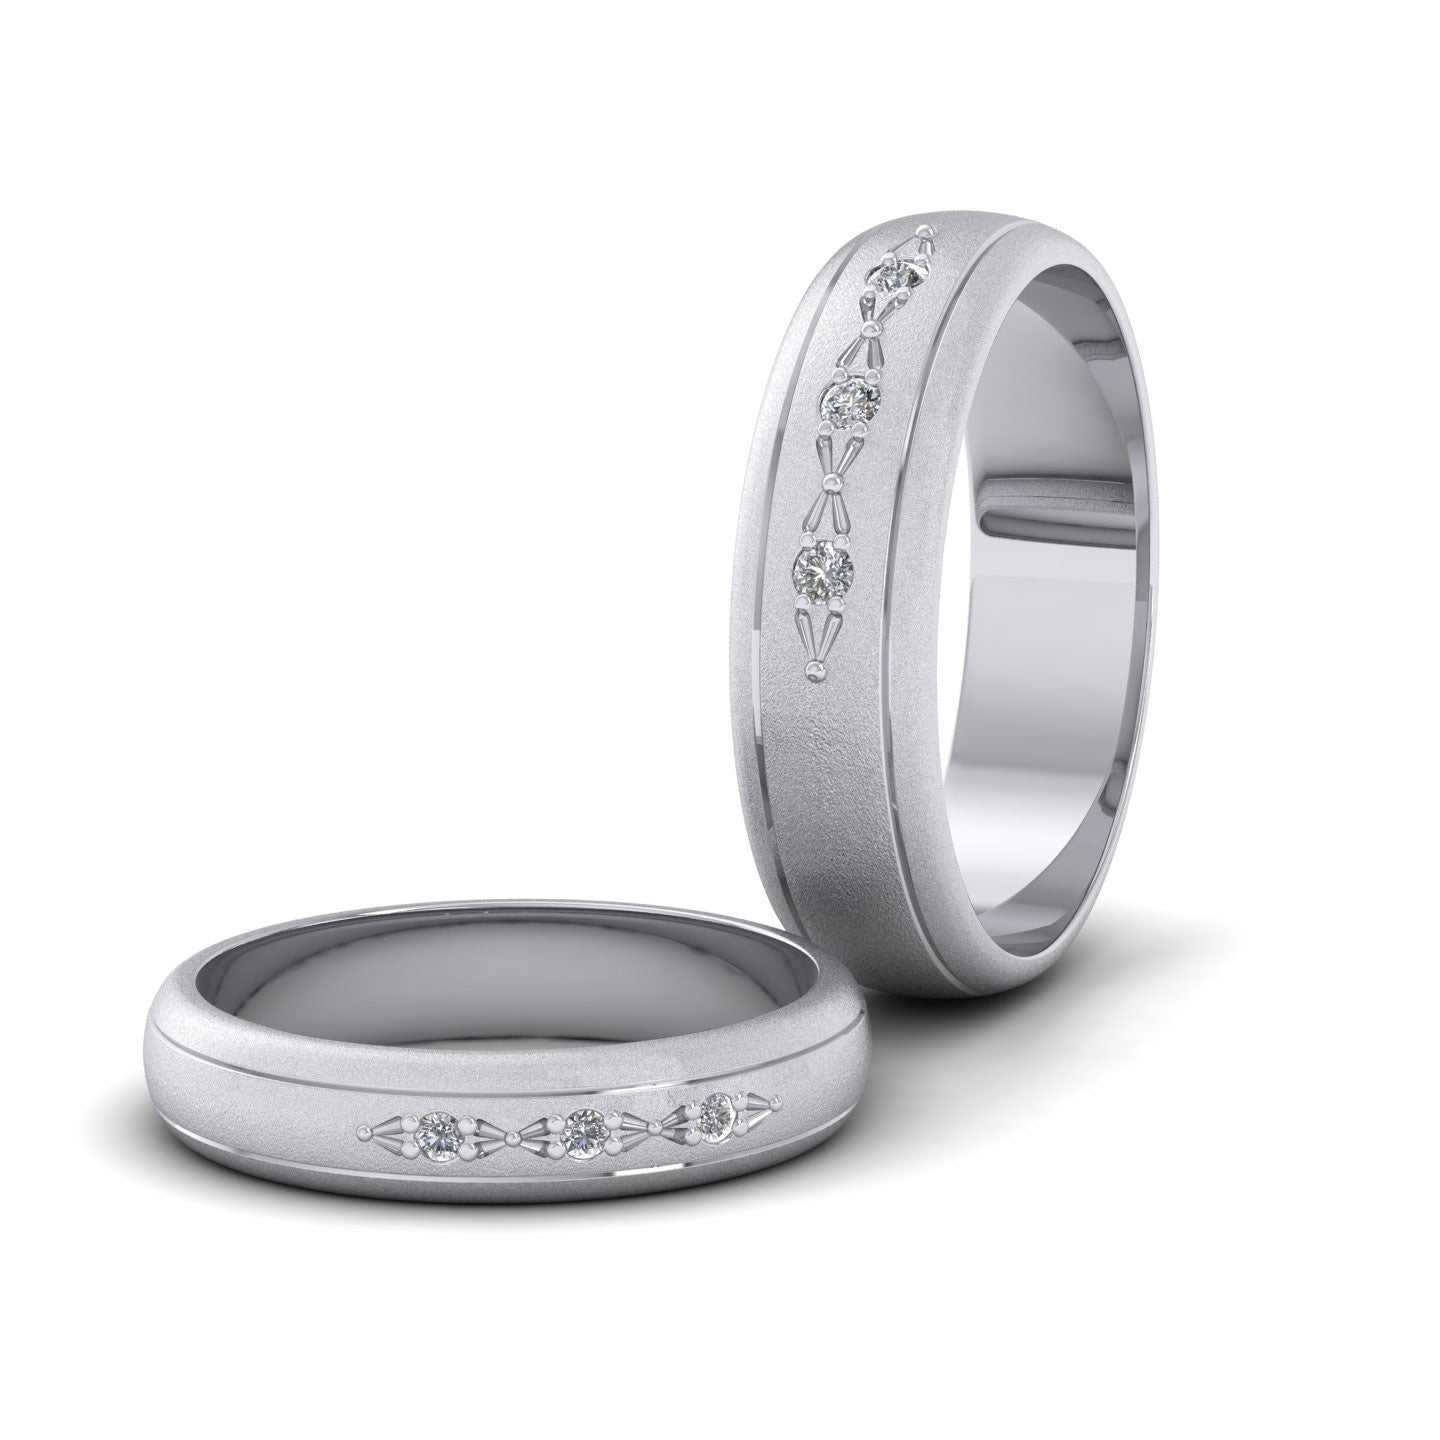 Three Diamond Set 950 Platinum 6mm Wedding Ring With Lines